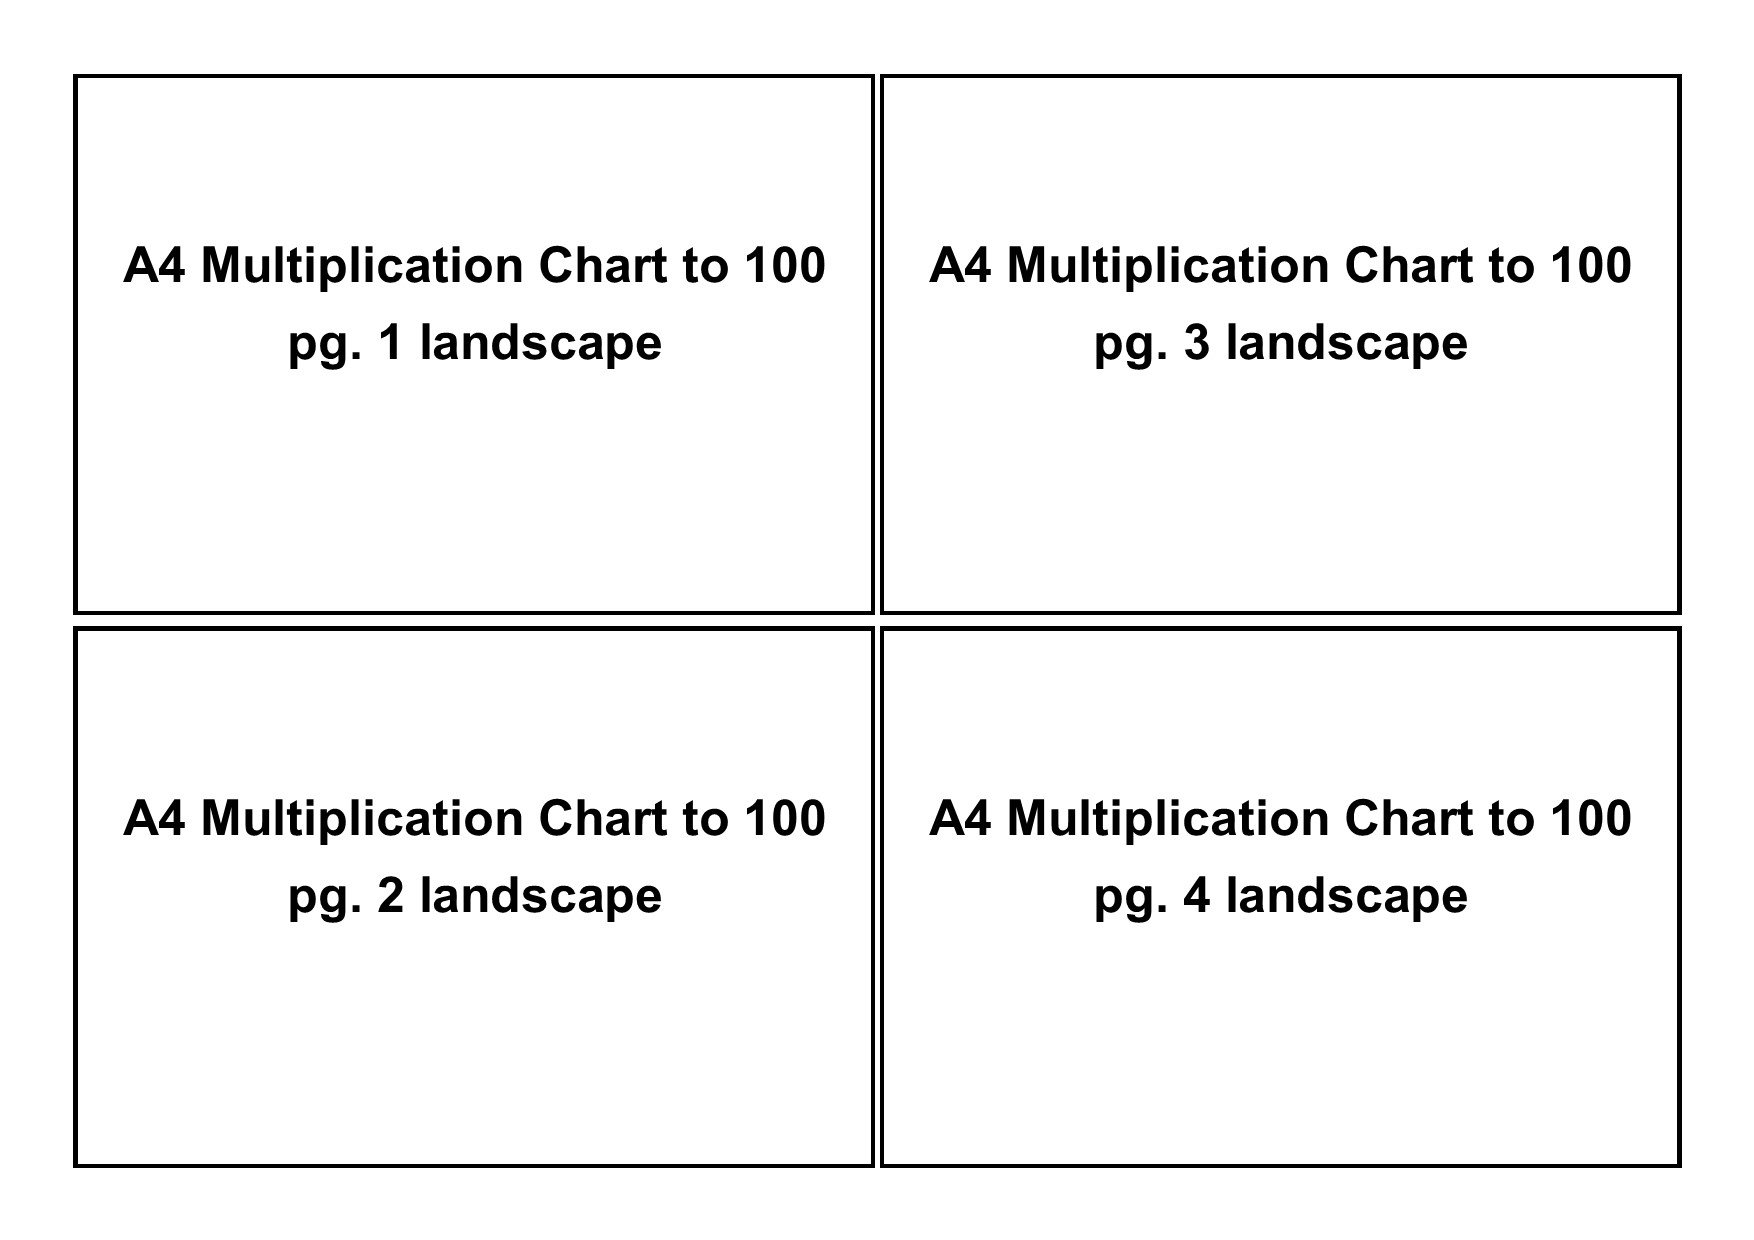 Multiplication Chart 1 100 Printable Pdf